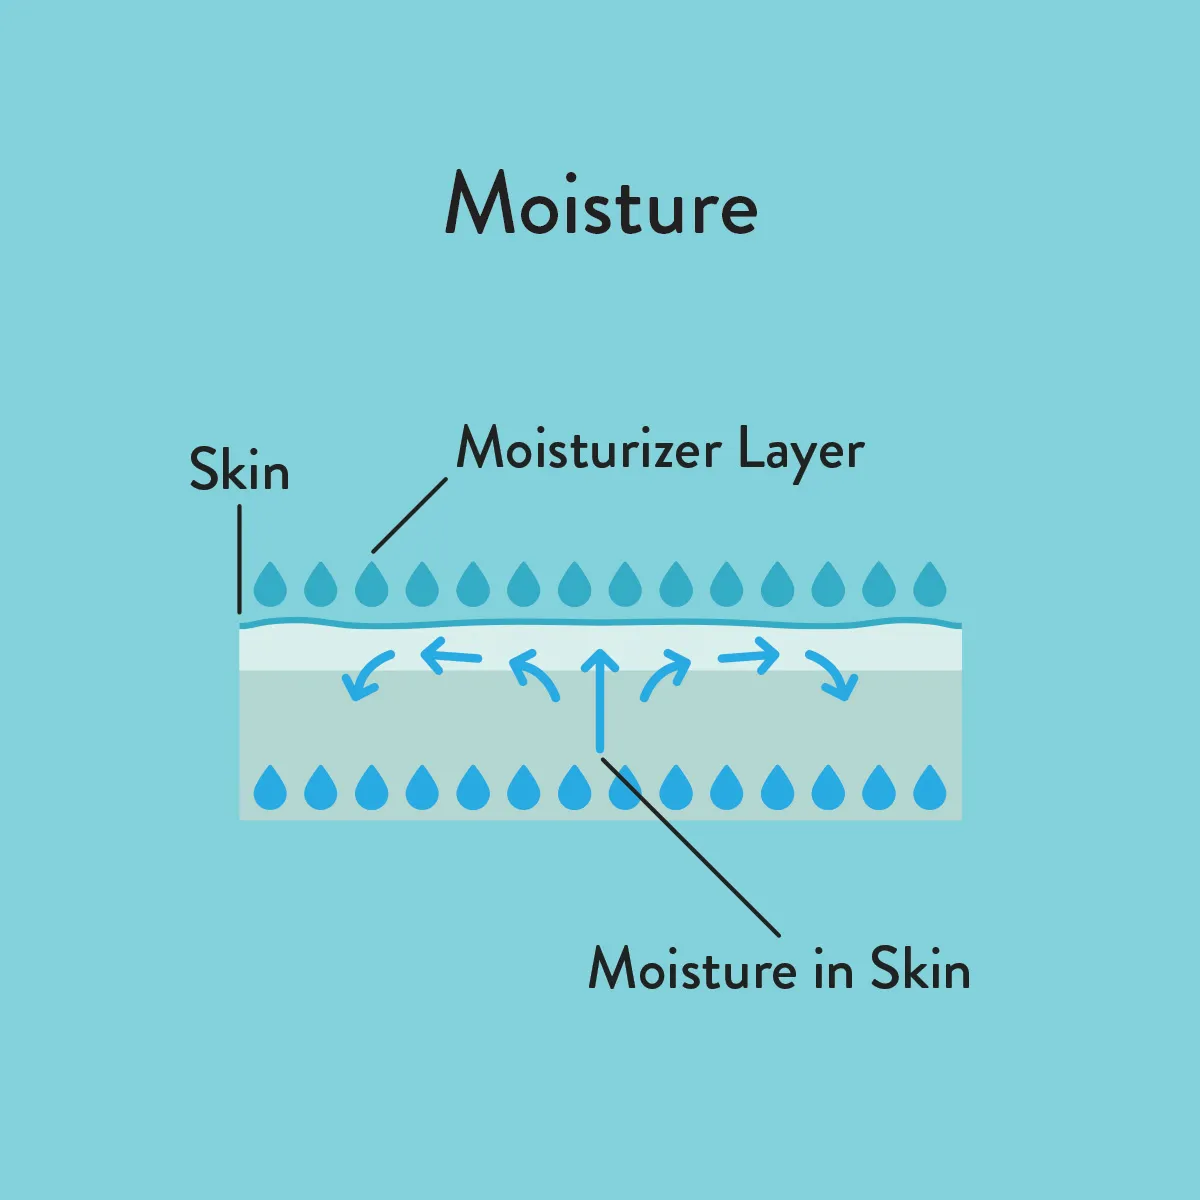 Skincare moisture informative diagram